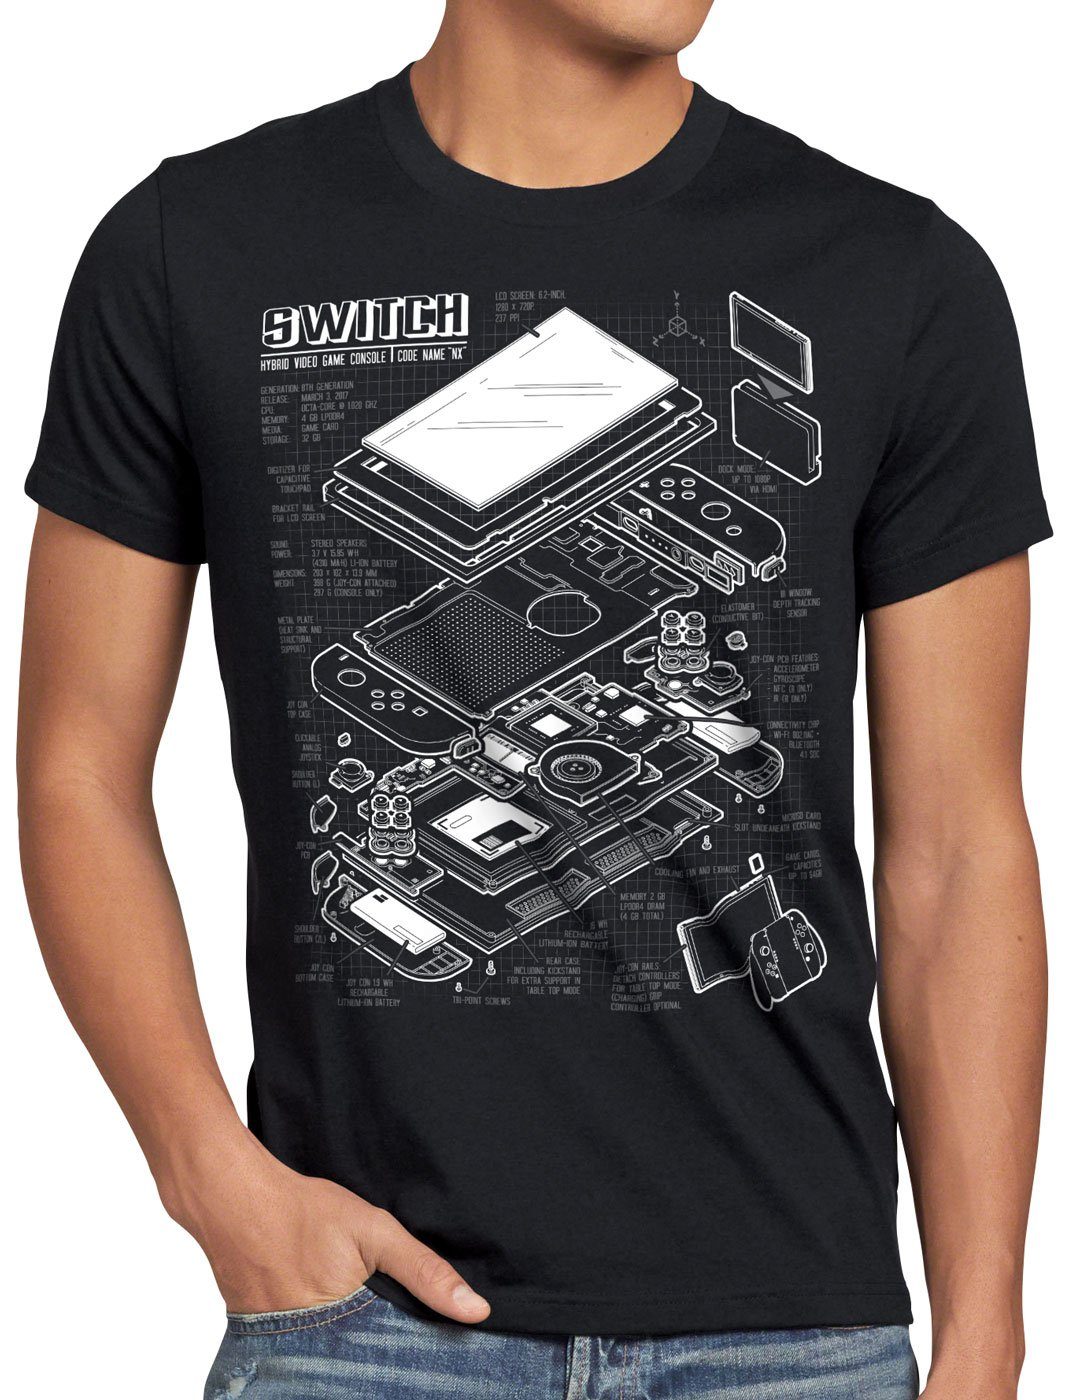 T-Shirt joy-con konsole schwarz Switch pro Print-Shirt Herren gamer Blaupause style3